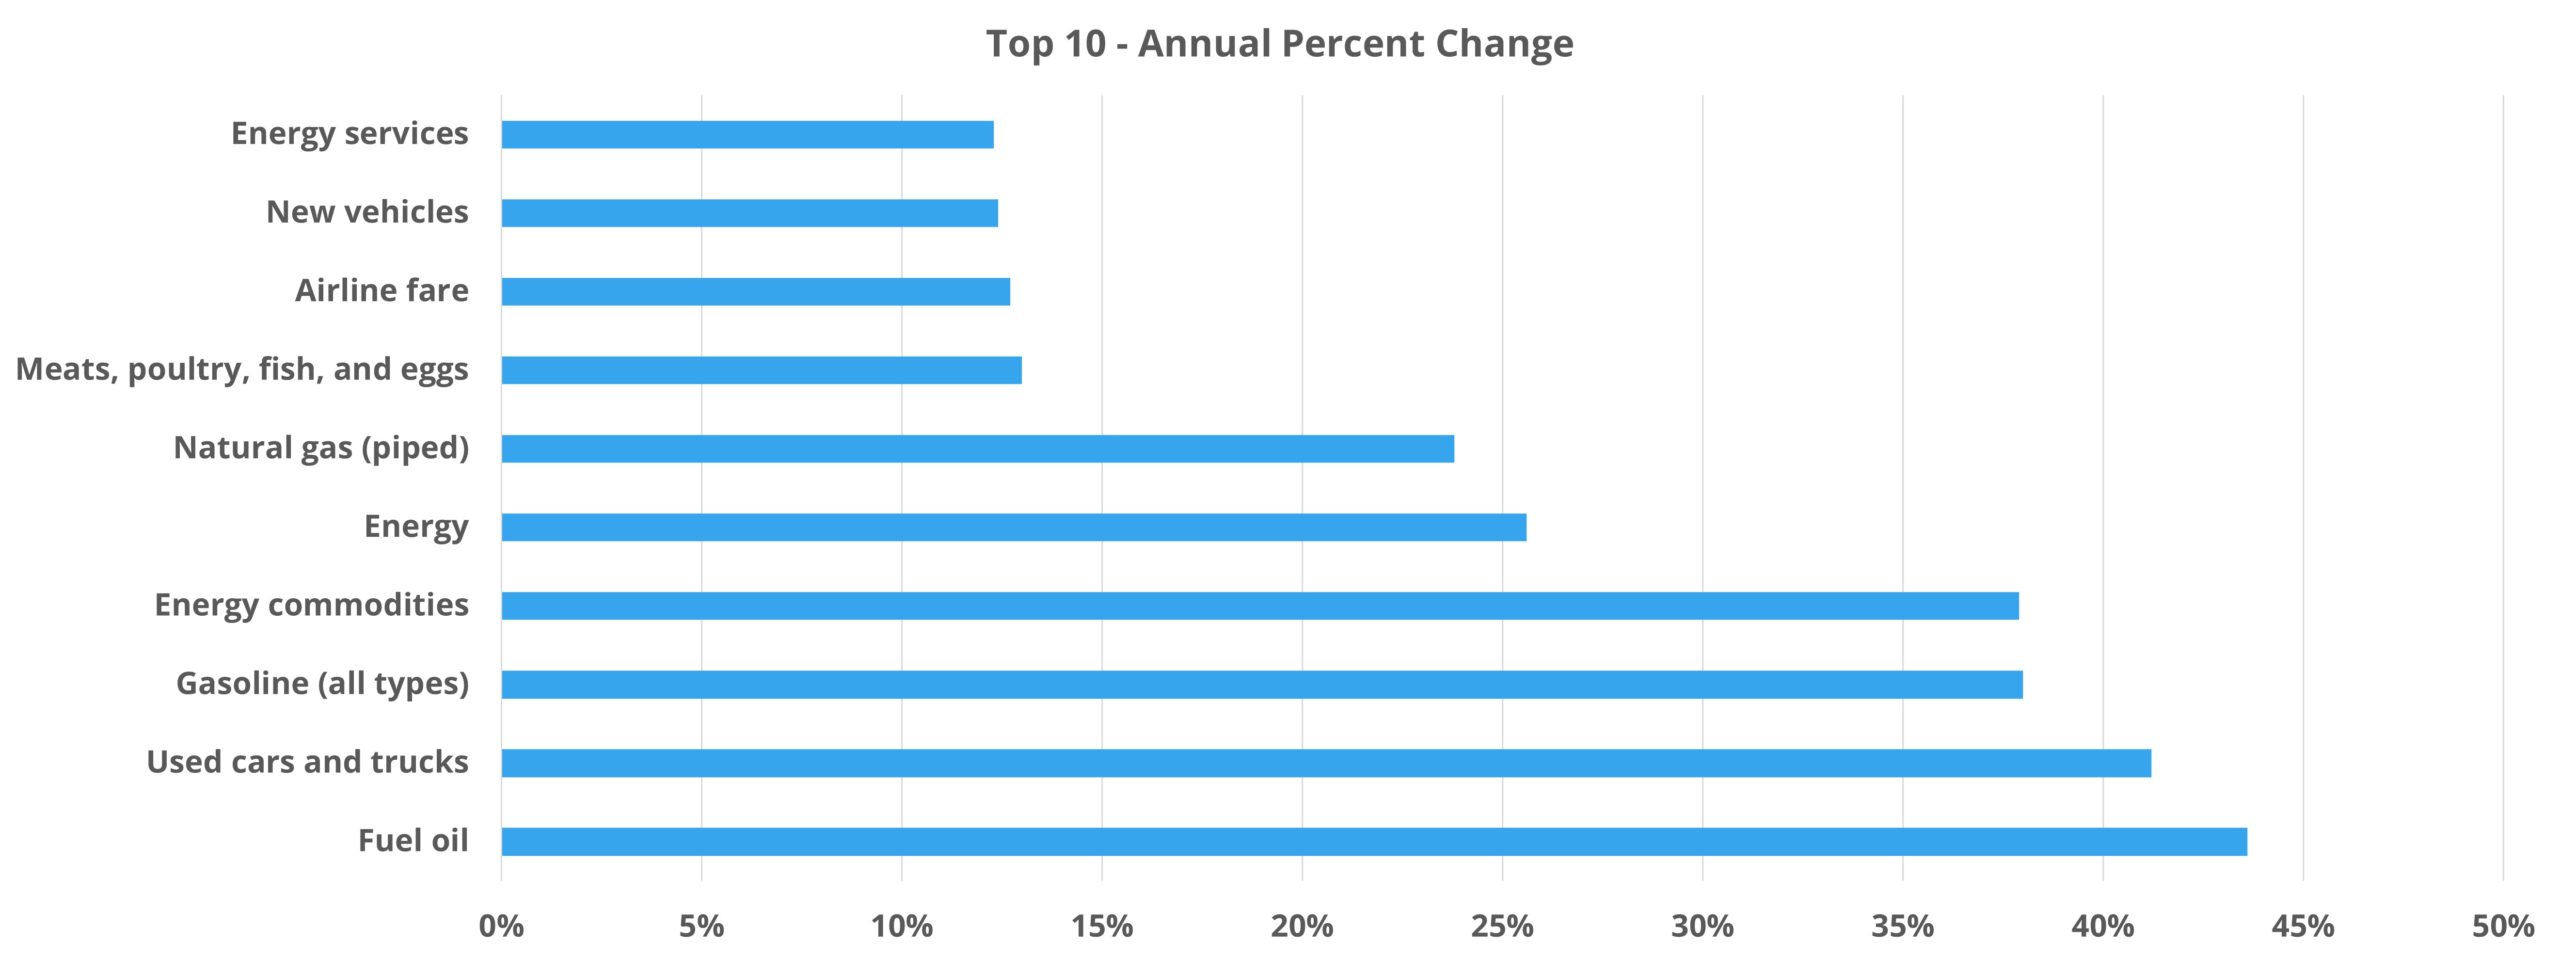 Top 10 - Annual Percent Change